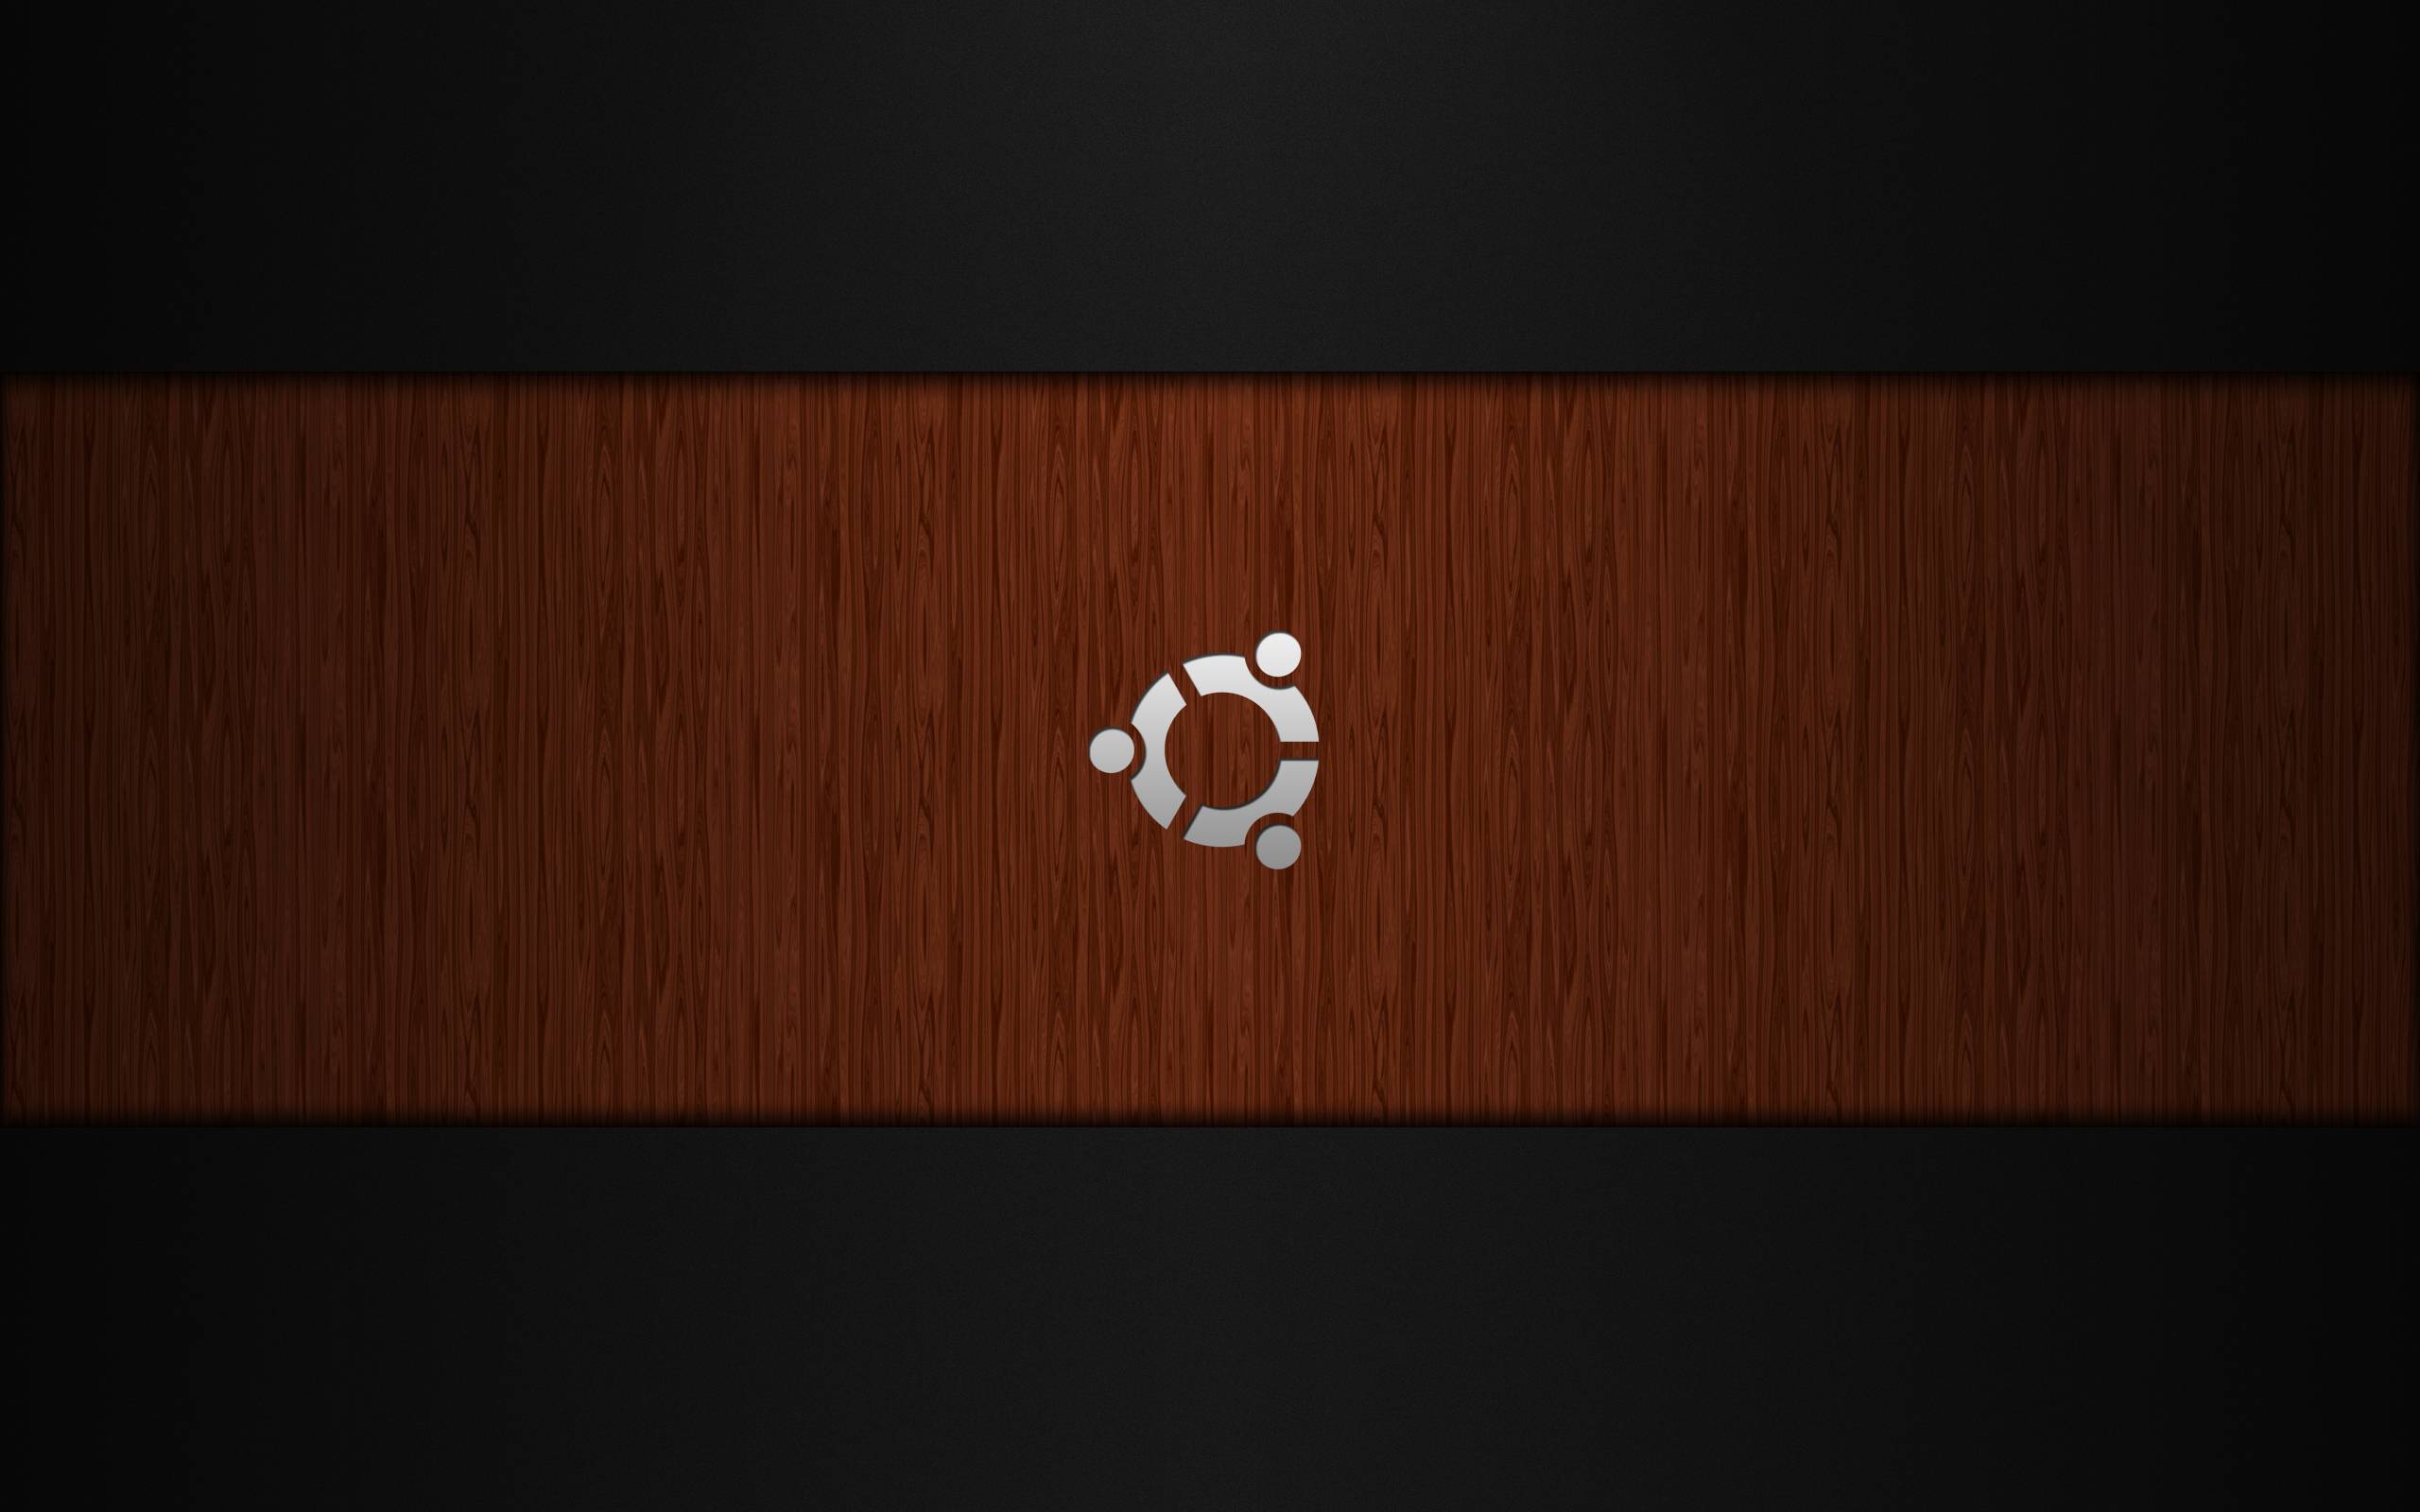 Ubuntu HD Wallpaper